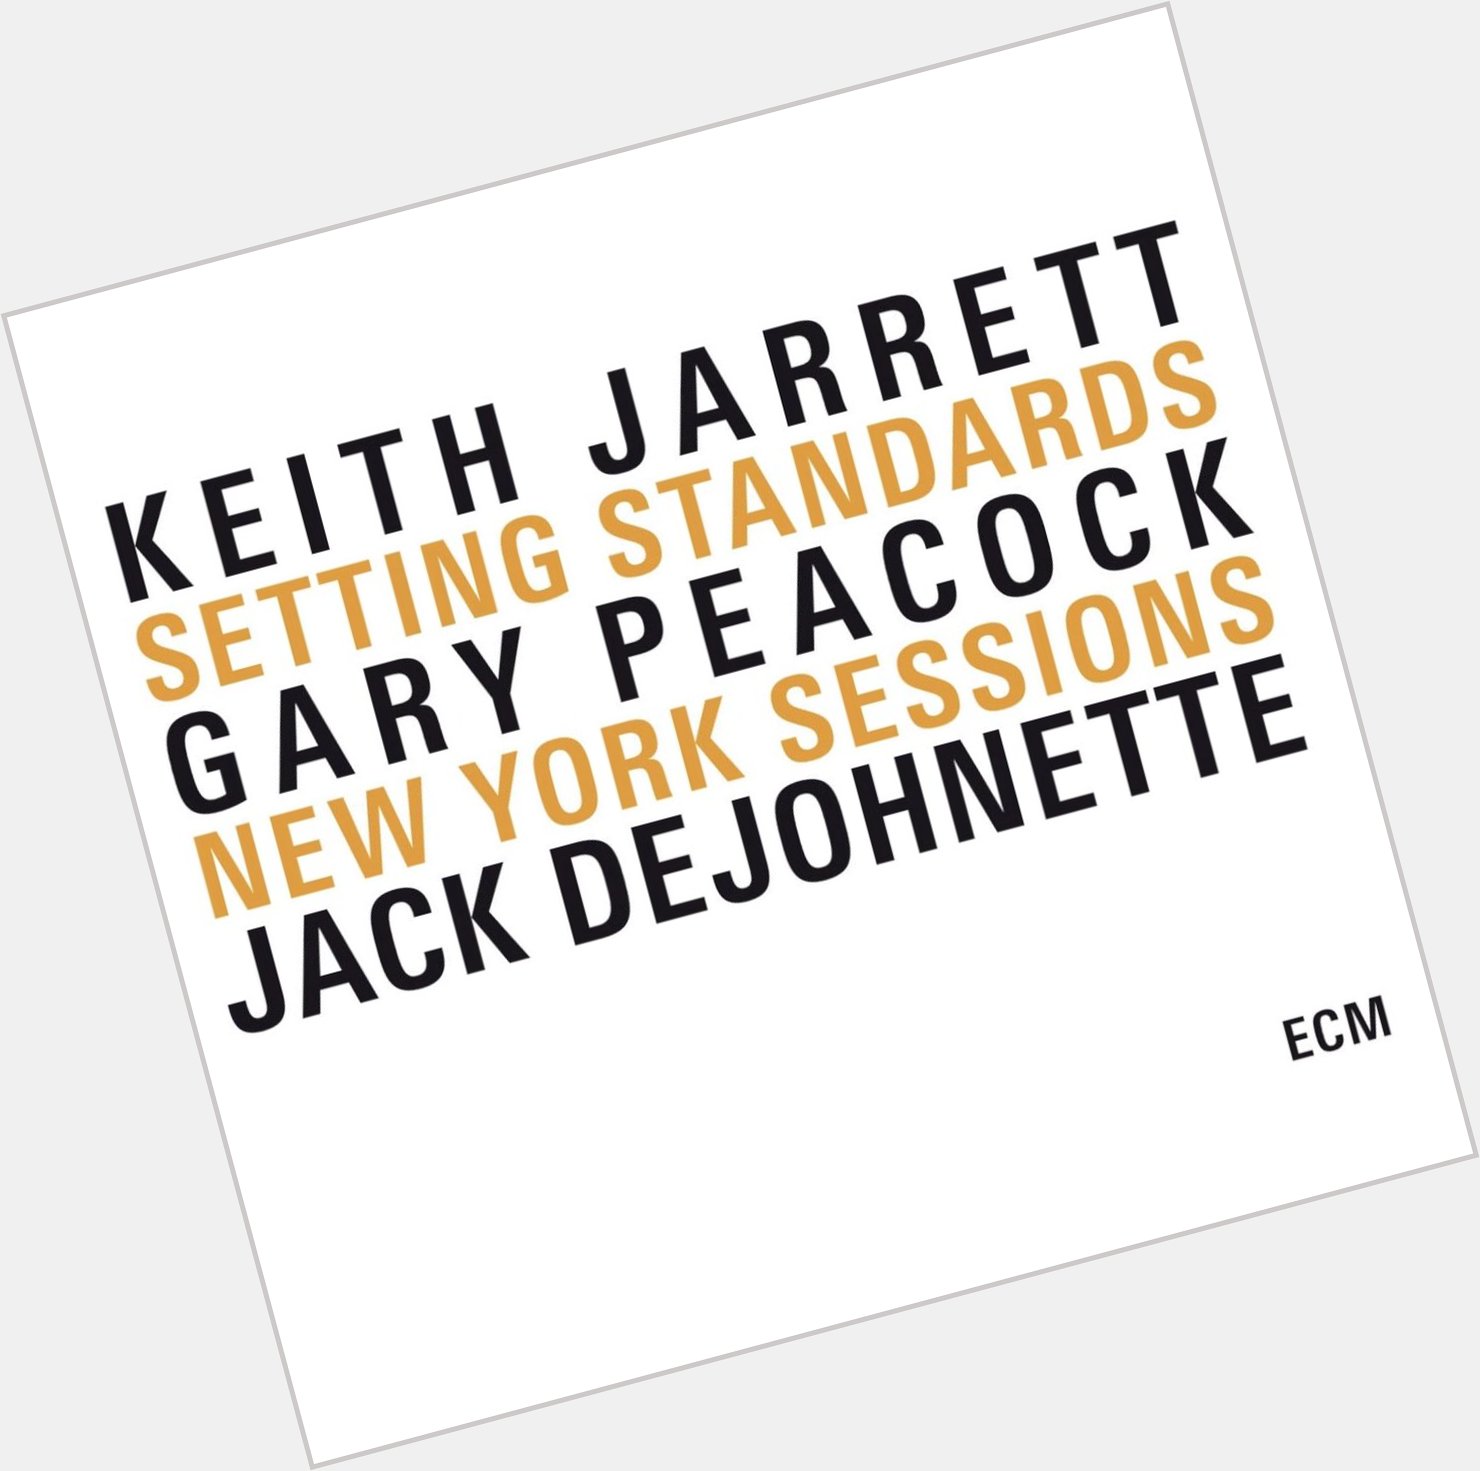 Happy birthday Keith Jarrett! 